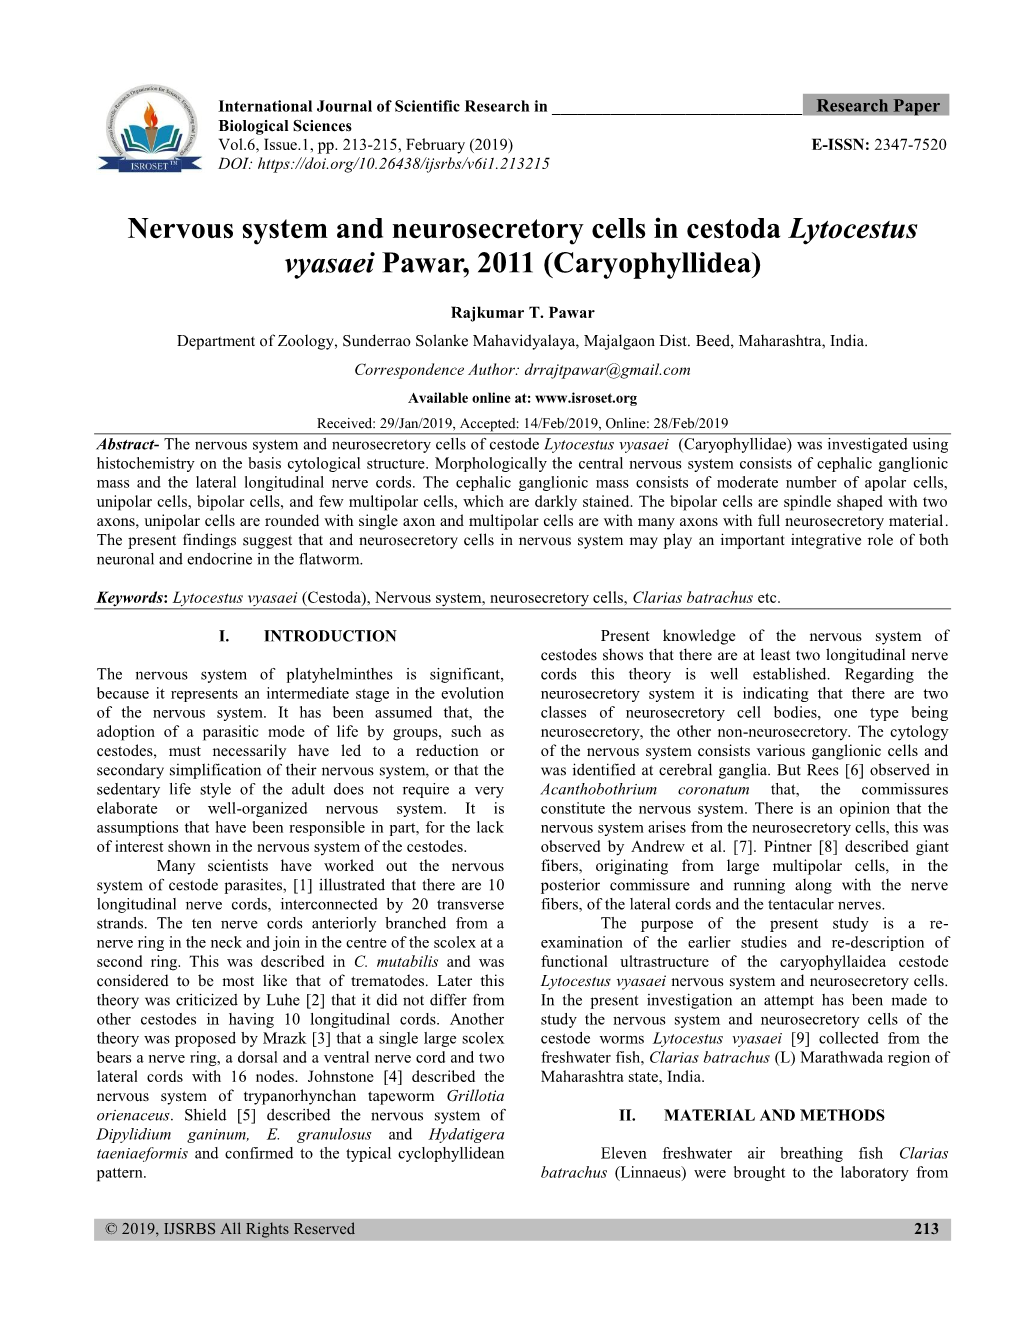 Nervous System and Neurosecretory Cells in Cestoda Lytocestus Vyasaei Pawar, 2011 (Caryophyllidea)